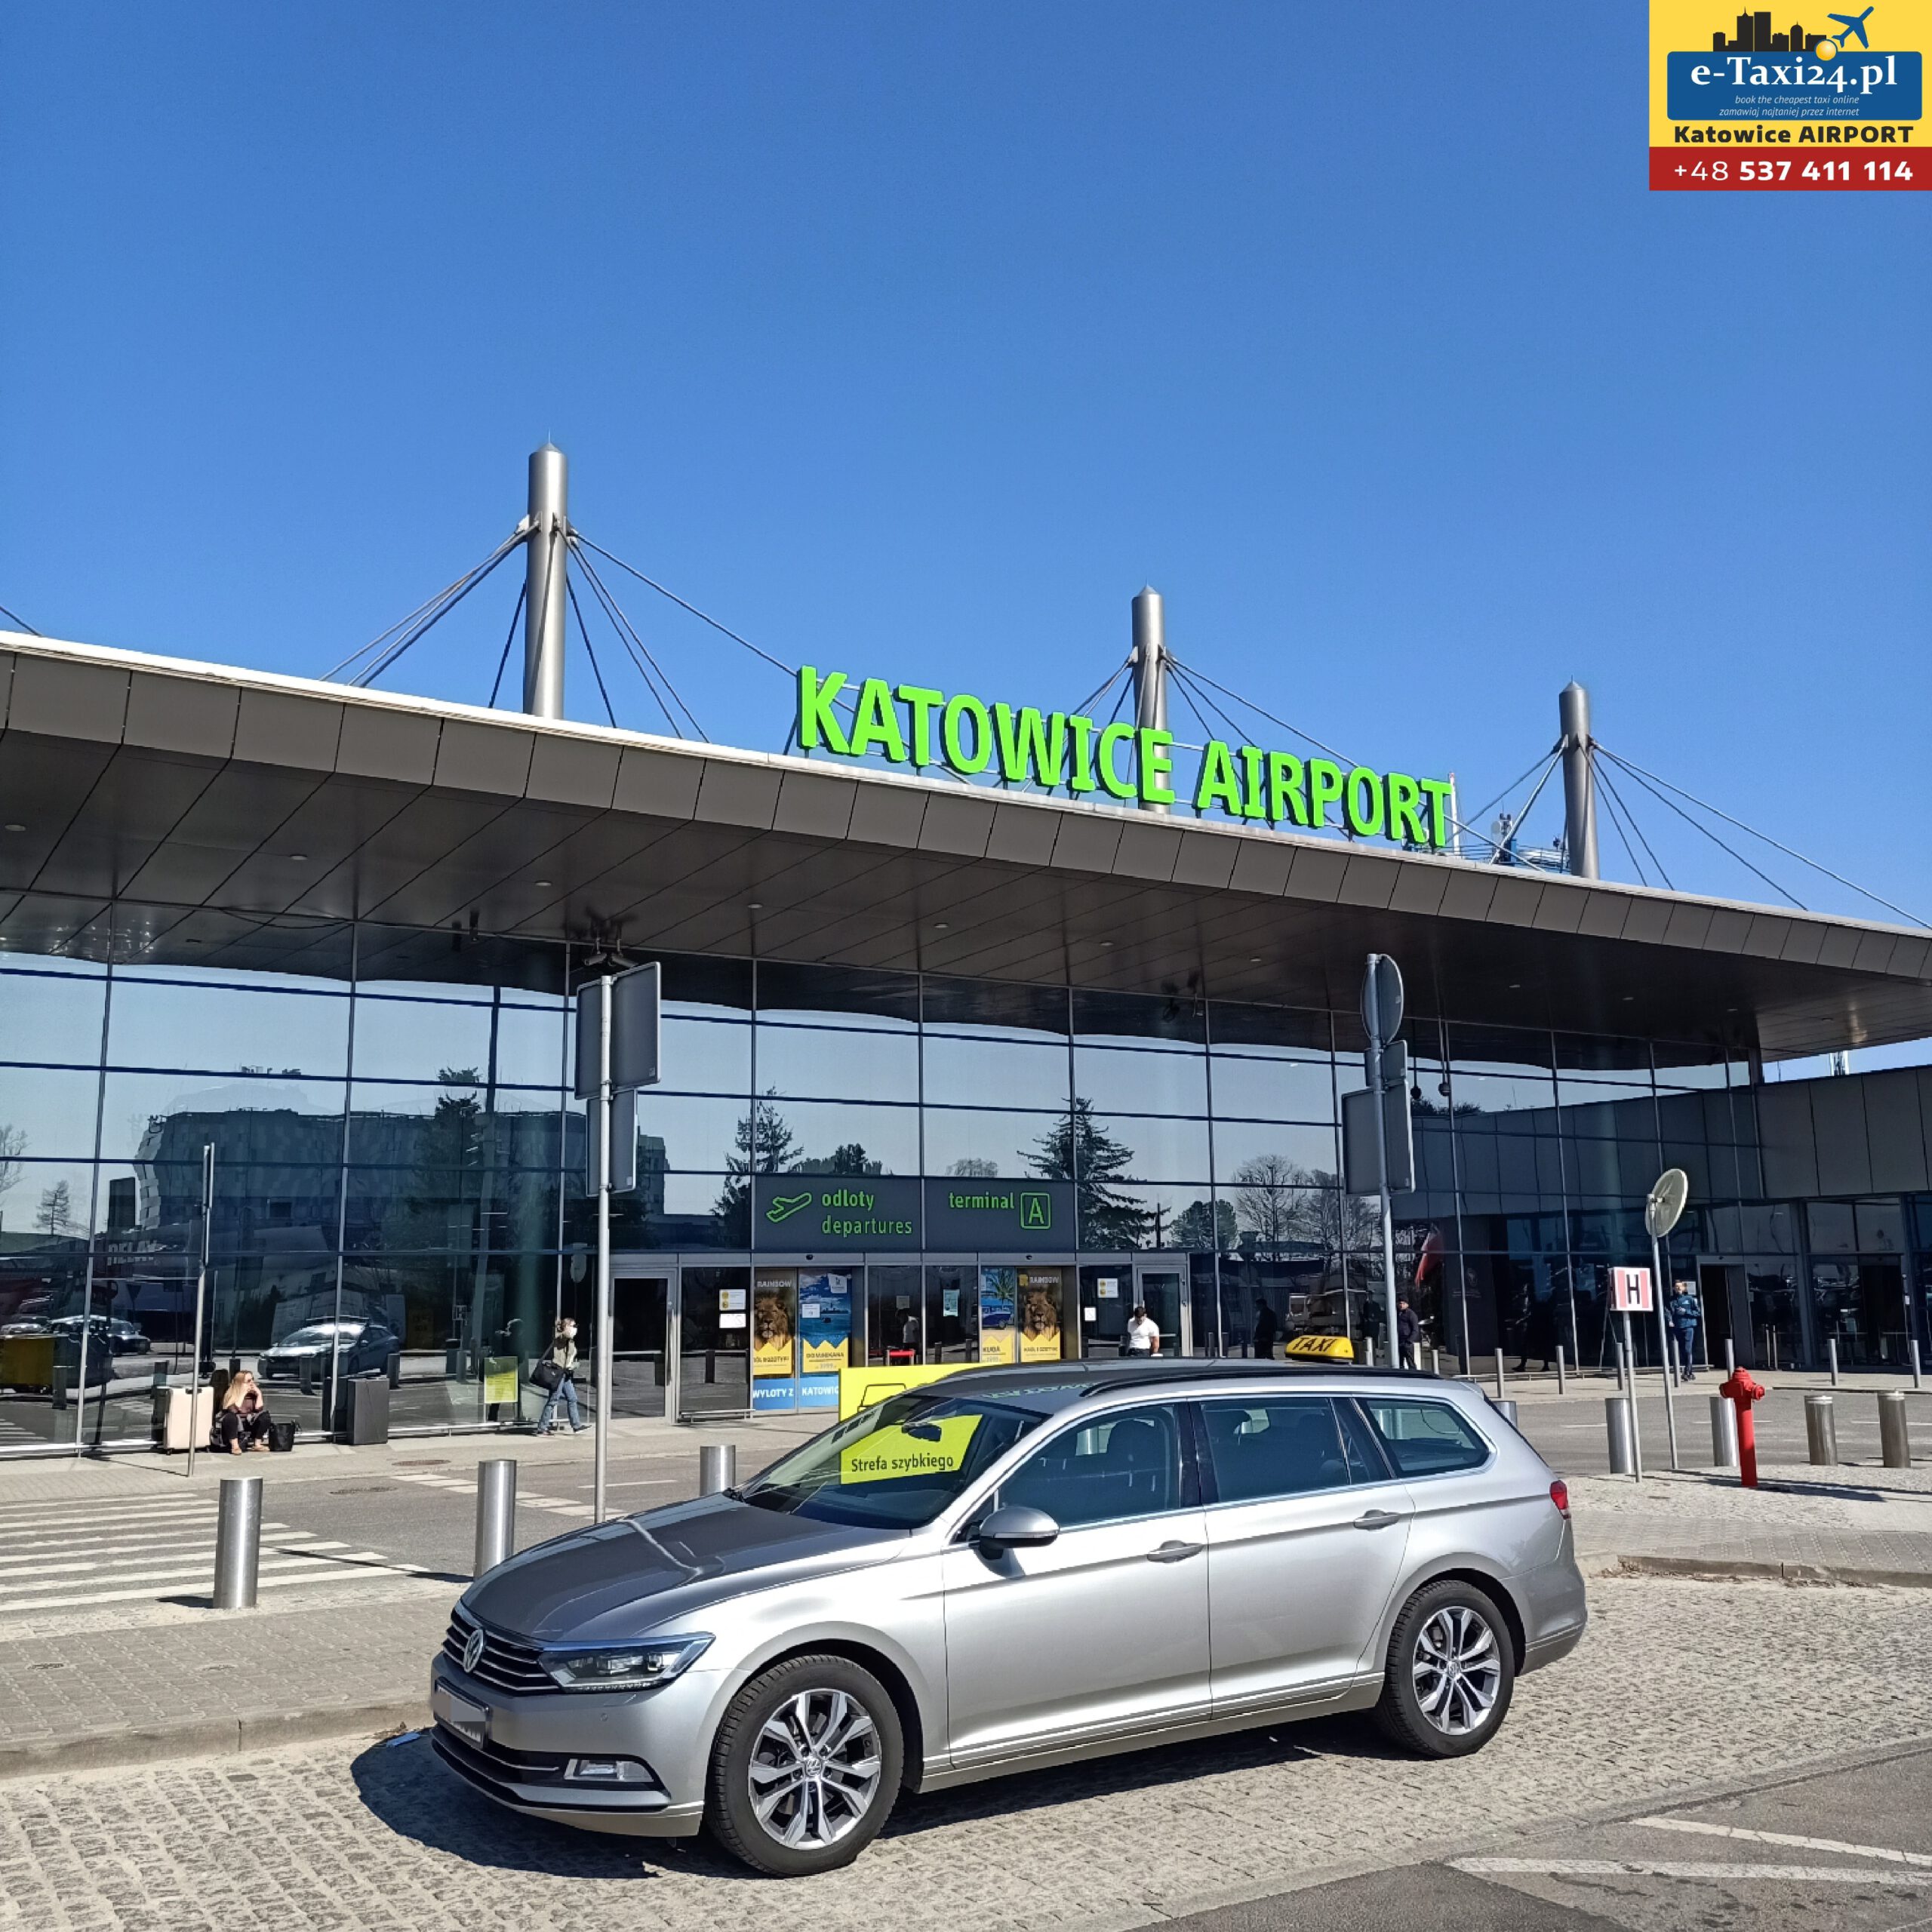 Taxi Airport Katowice - GB, US 2